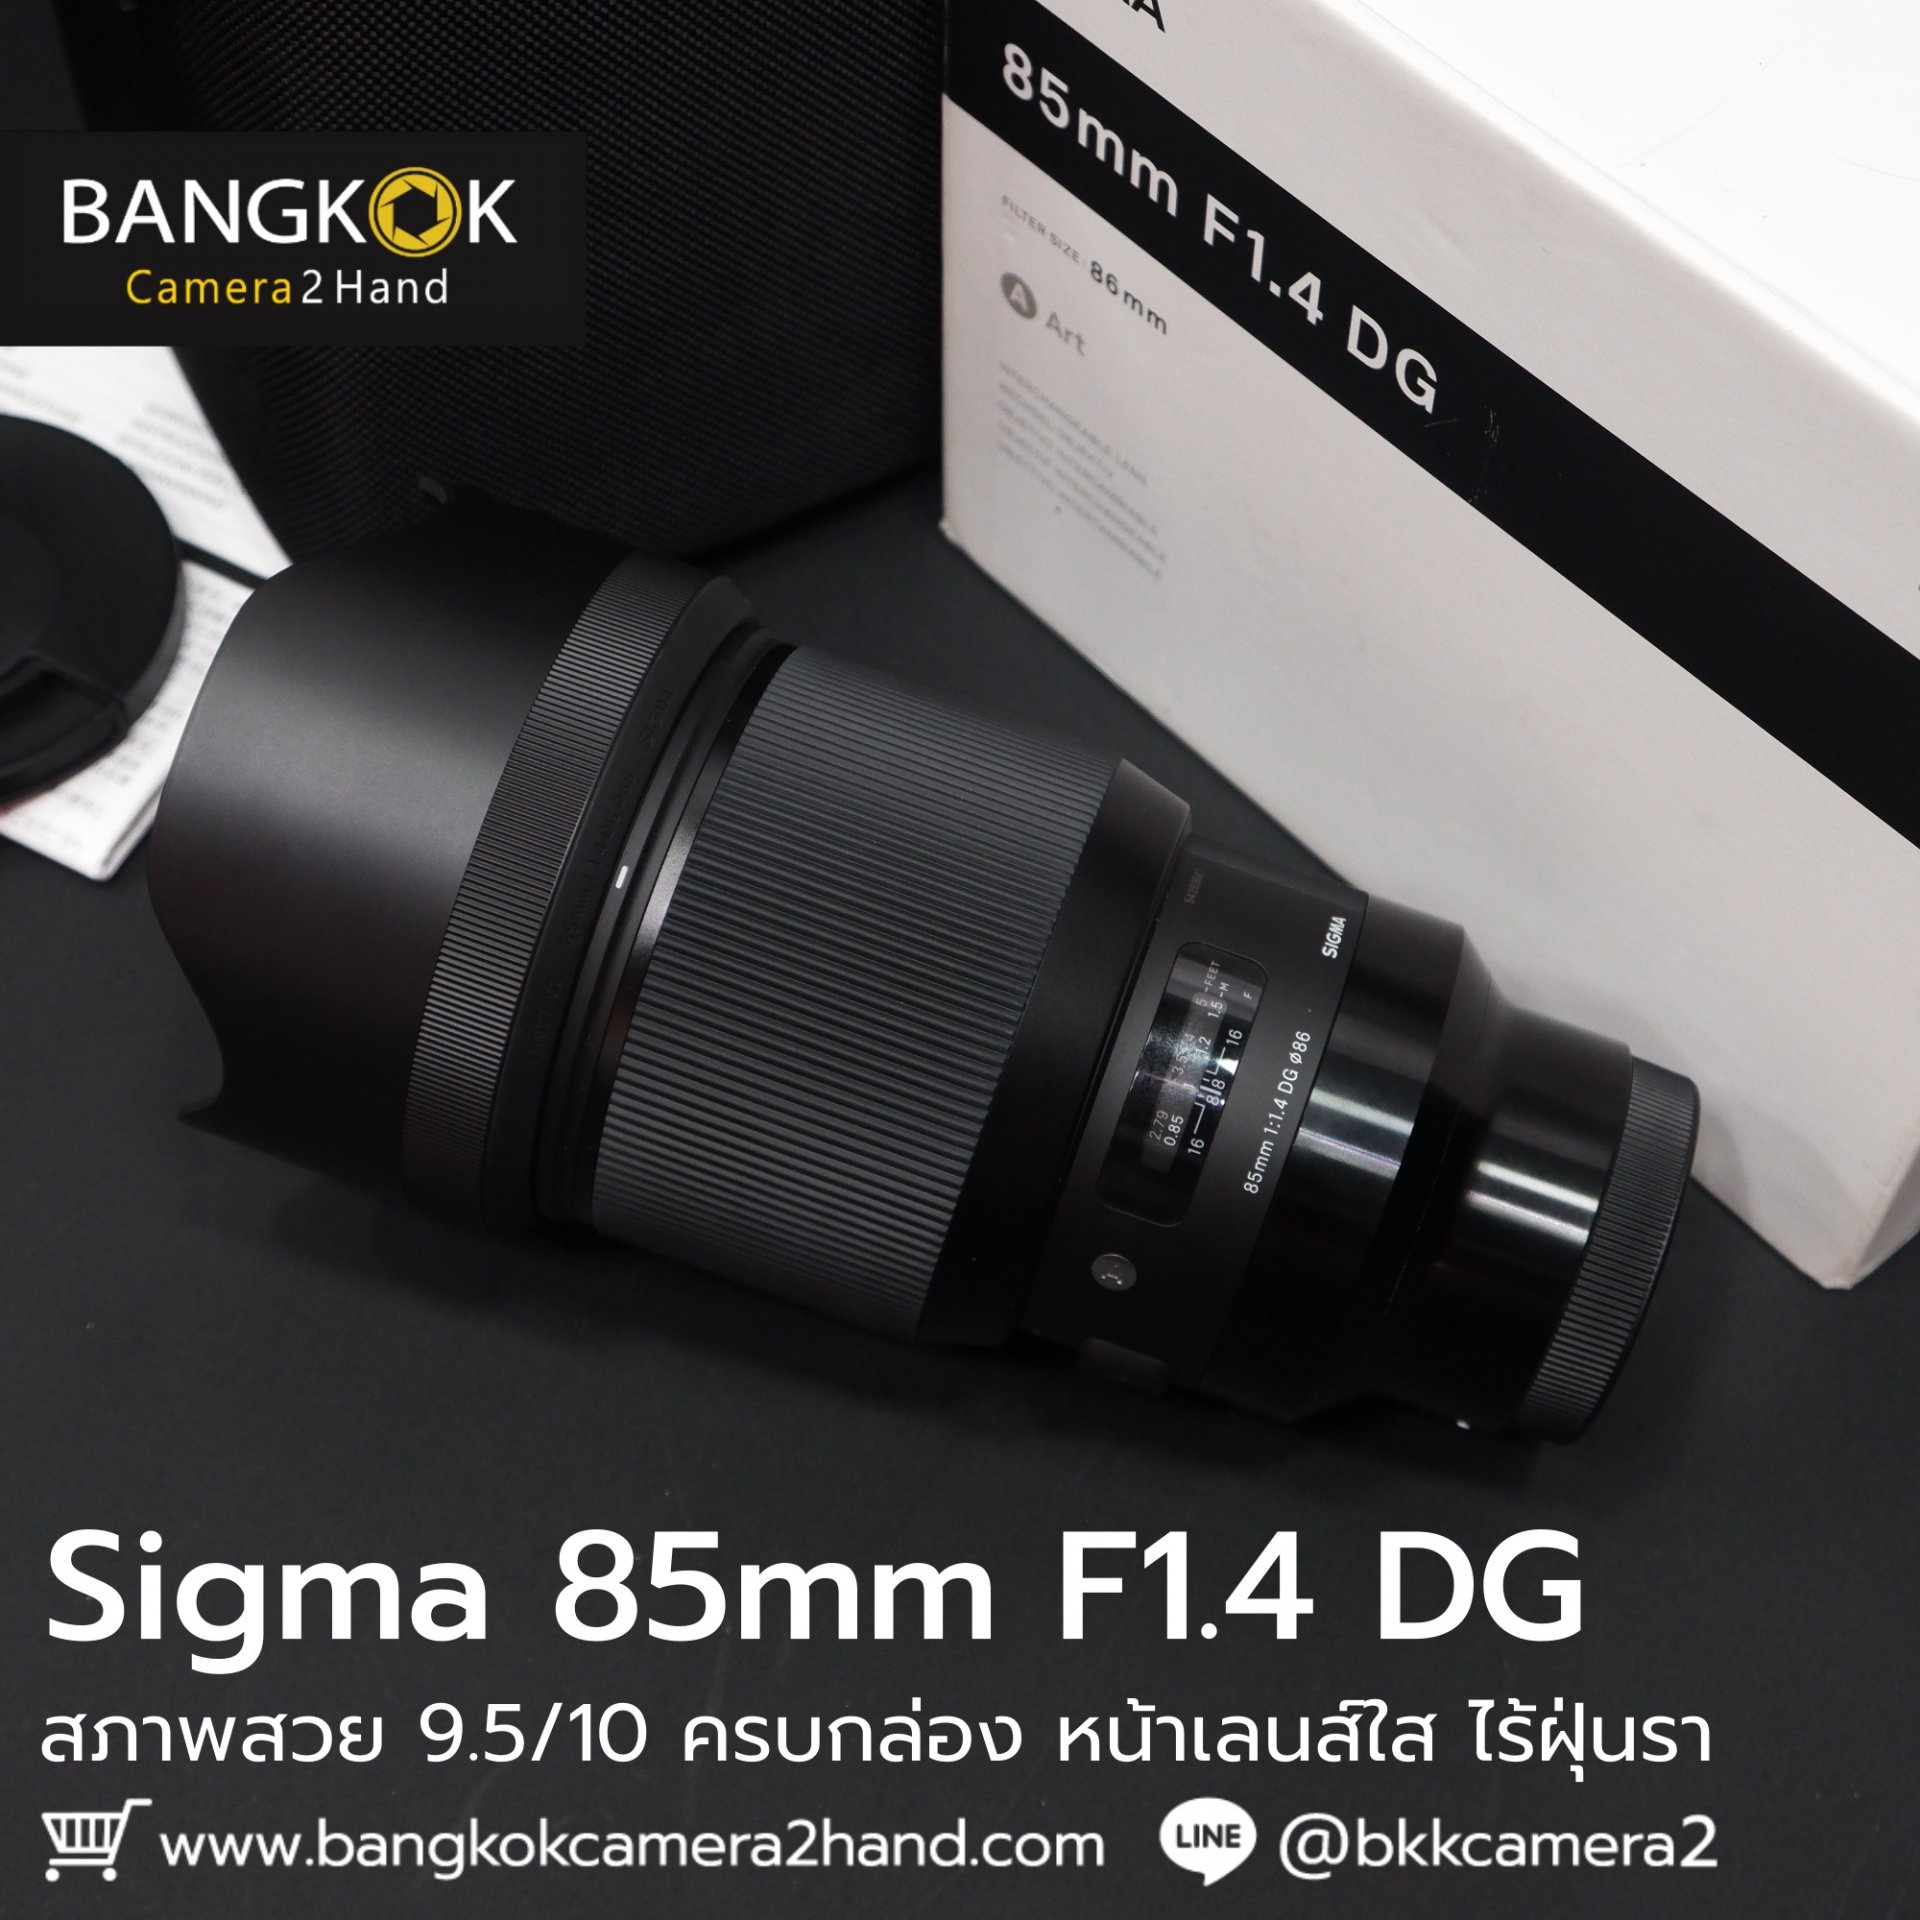 SIGMA 85mm F1.4 DG อุปกรณ์ครบกล่อง